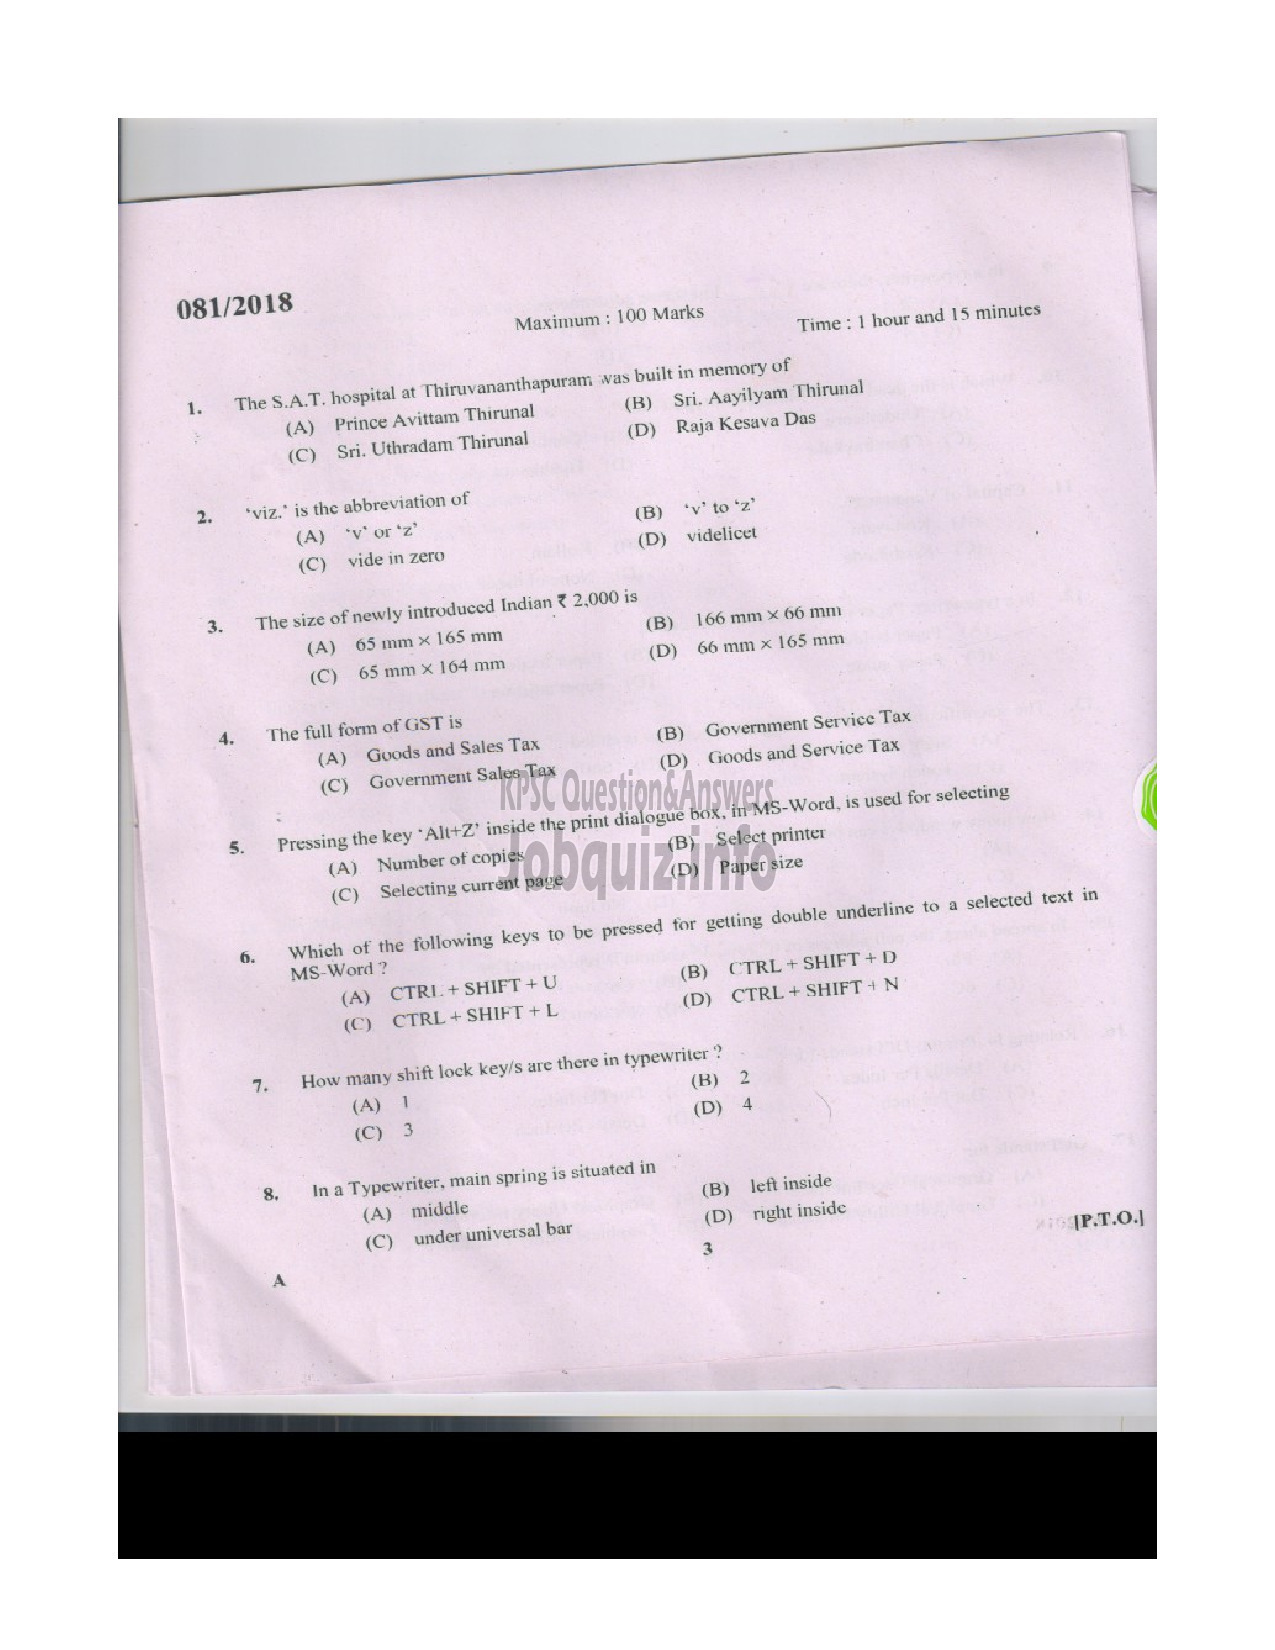 Kerala PSC Question Paper - ASSISTANT STENOGRAPHER CONFIDENTIAL ASST.GR.II L.D.TYPIST CLERK TYPIST KMTWWFB GOVT.OWNED-2